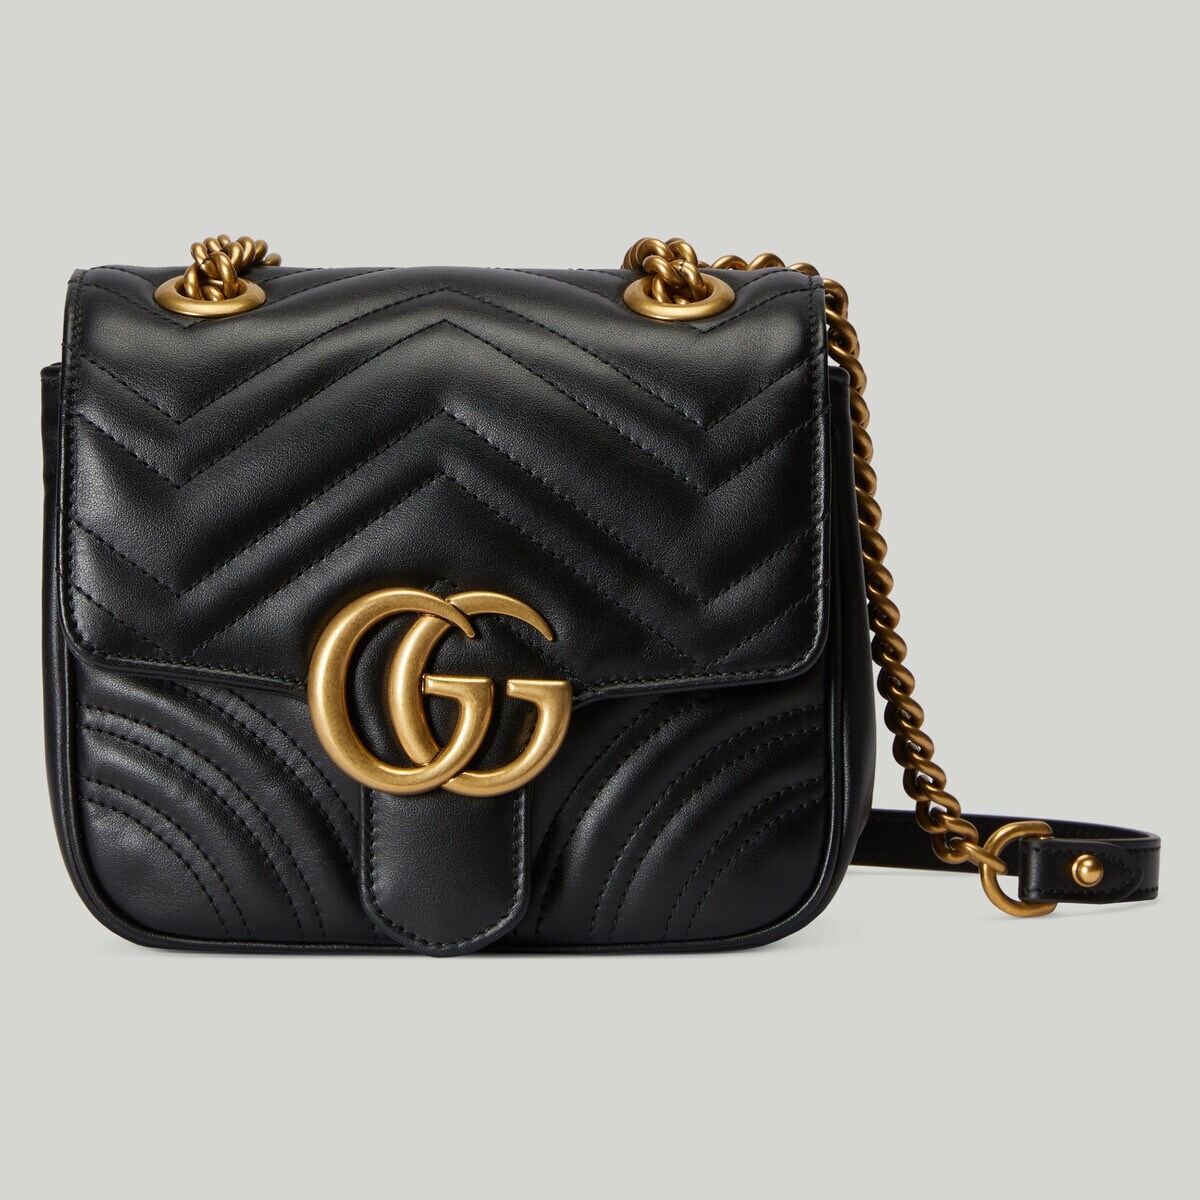 GG Marmont mini shoulder bag - 1